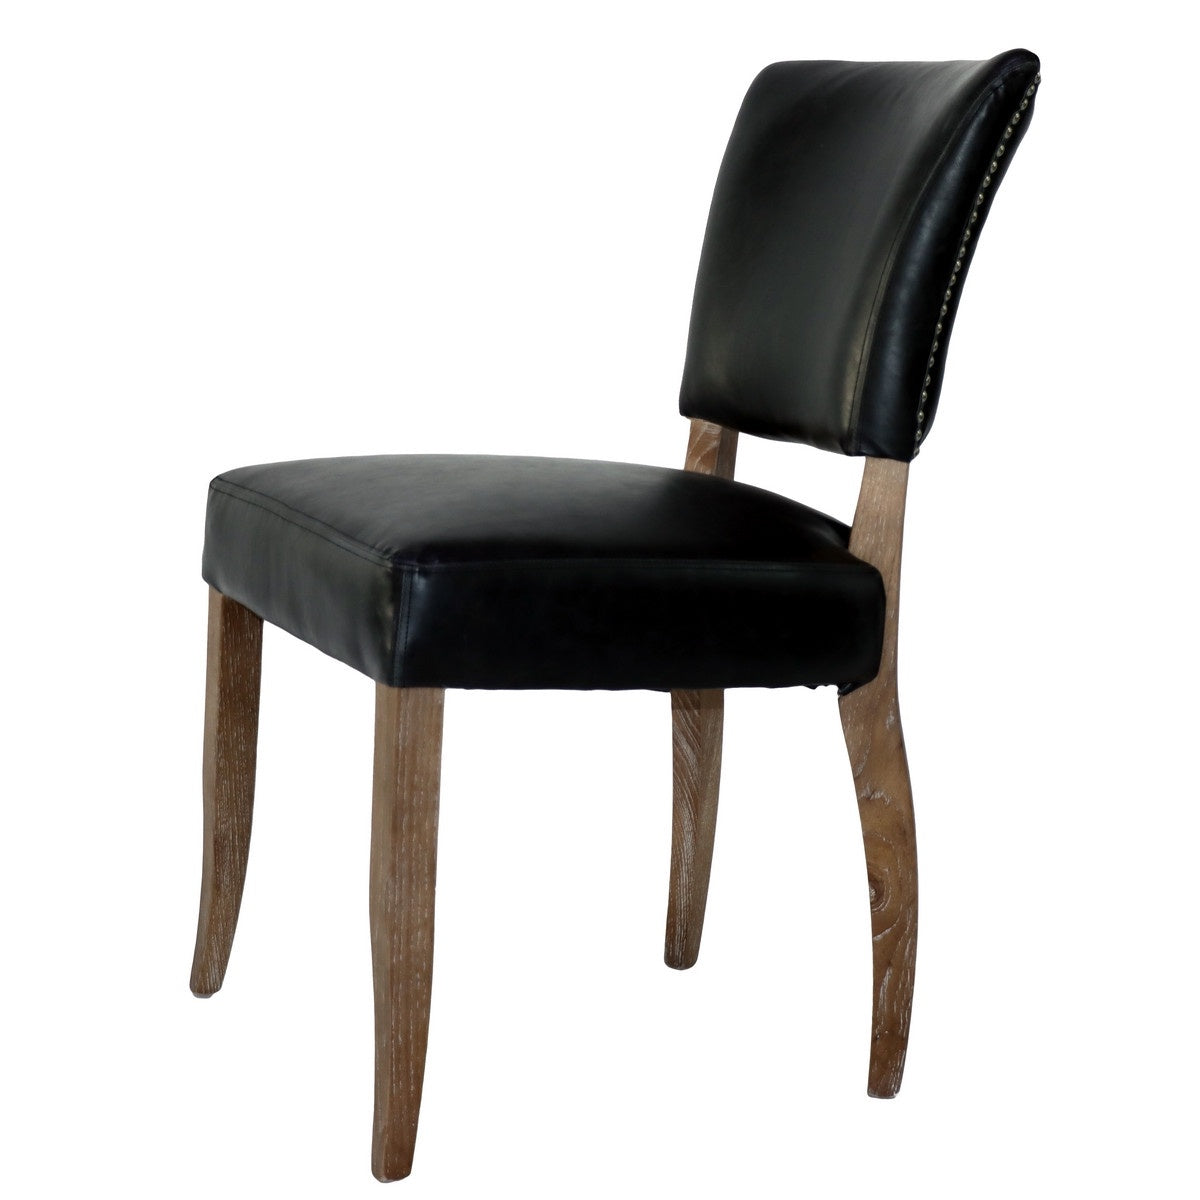 Chair - Black leather vintage